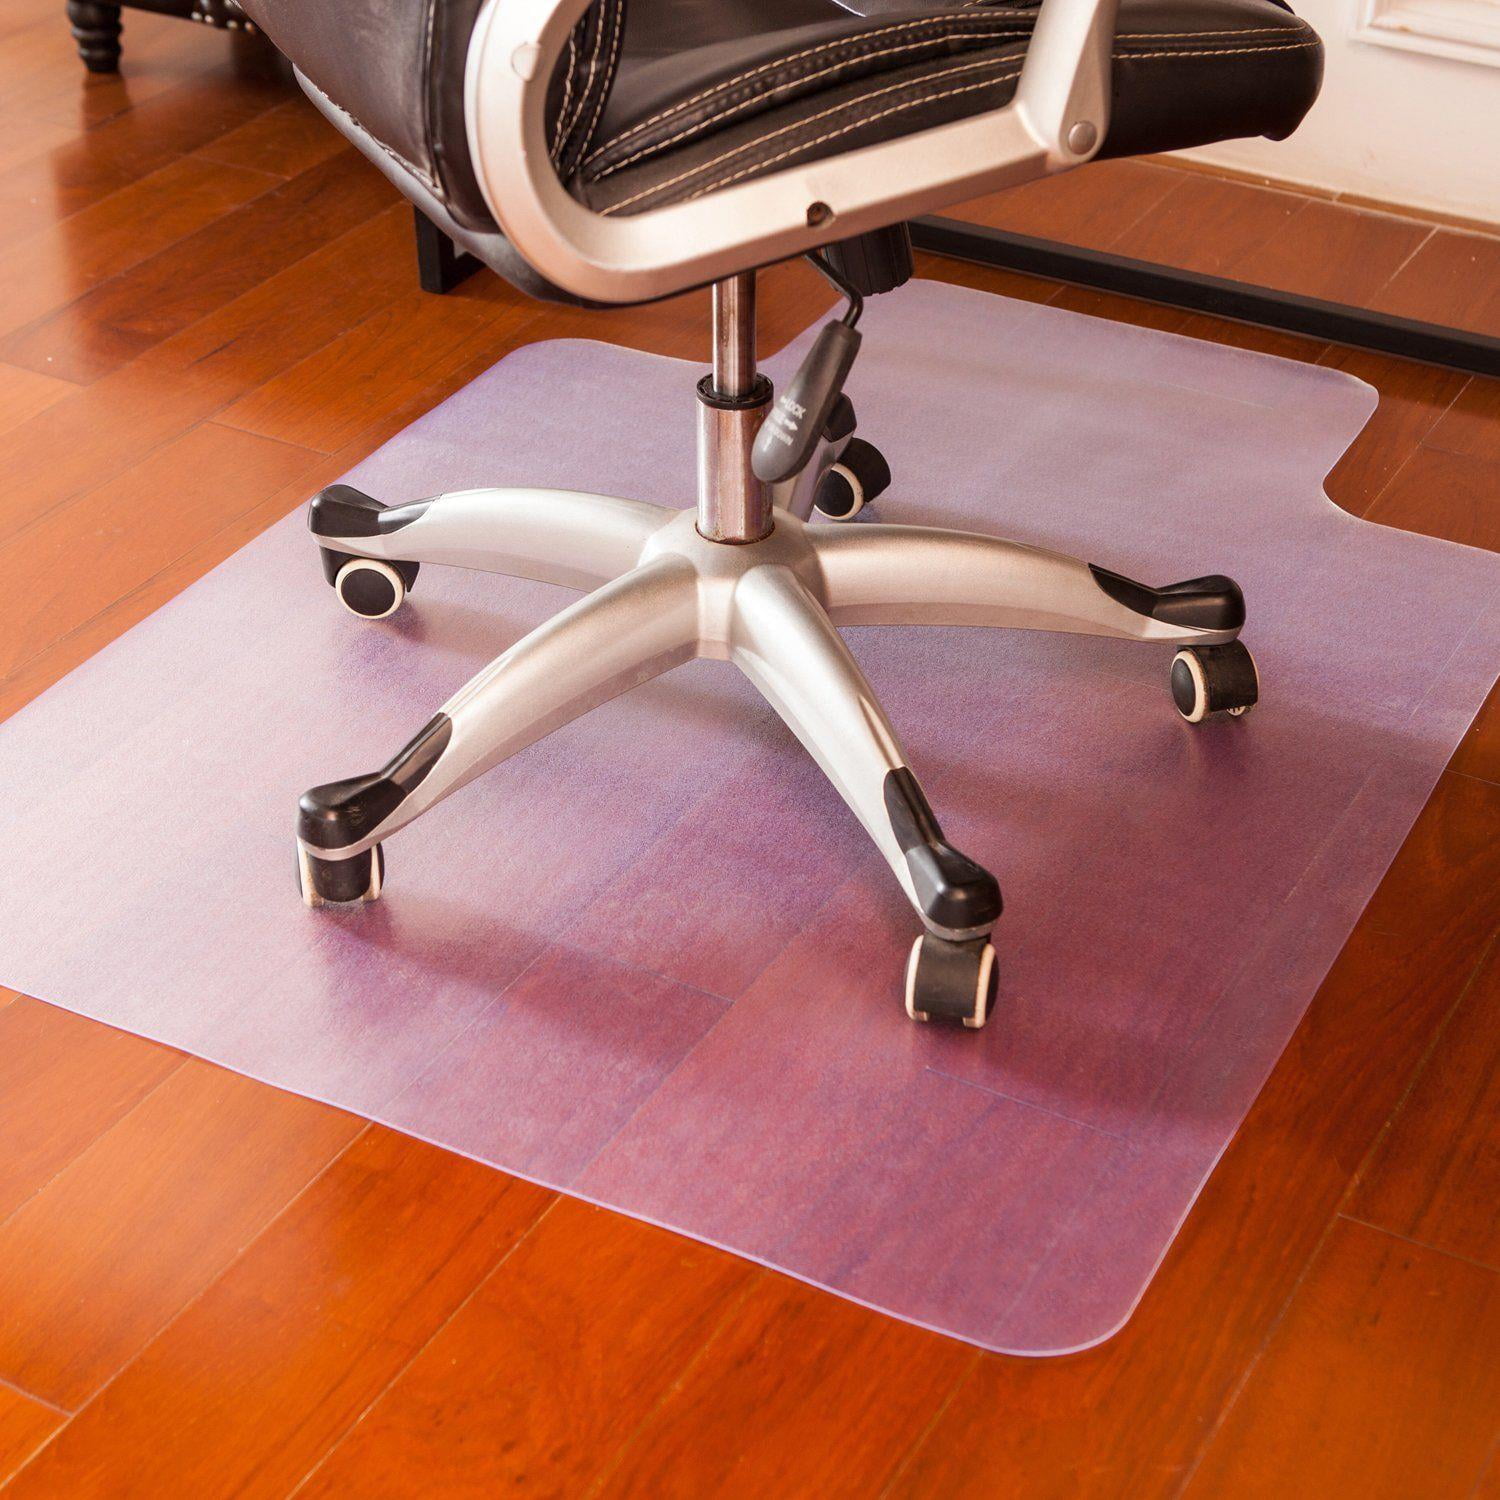 Non Slip Door Mats Inside Floor Mats Area Rug Abstract color Chair Mat Protector for Hard Floors